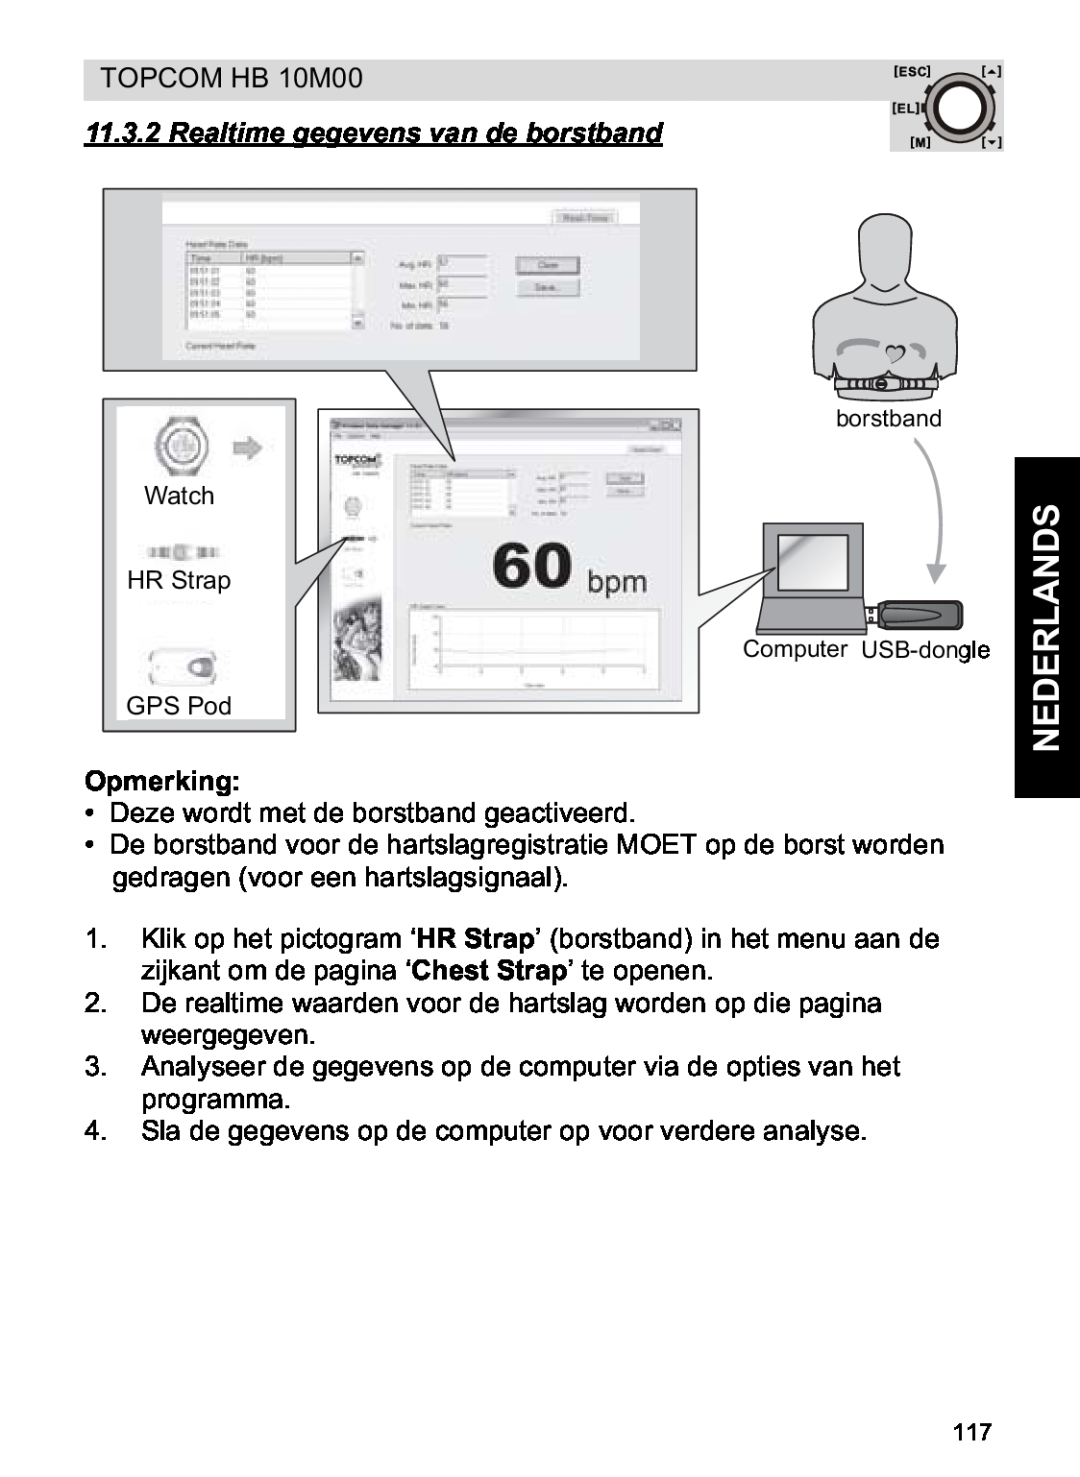 Topcom HB 10M00 manual Realtime gegevens van de borstband, Nederlands, Opmerking 